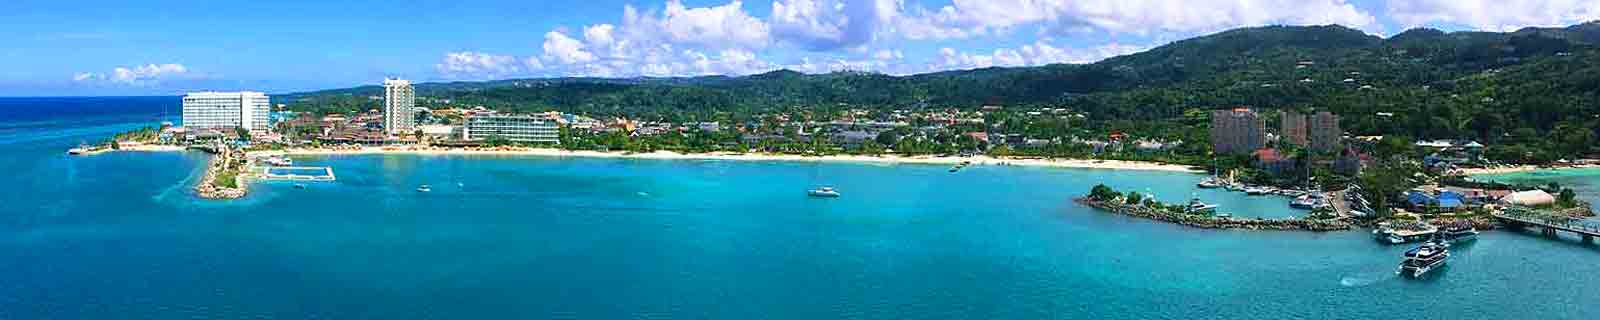 Panoramic Photo of Ocho Rios, Jamaica